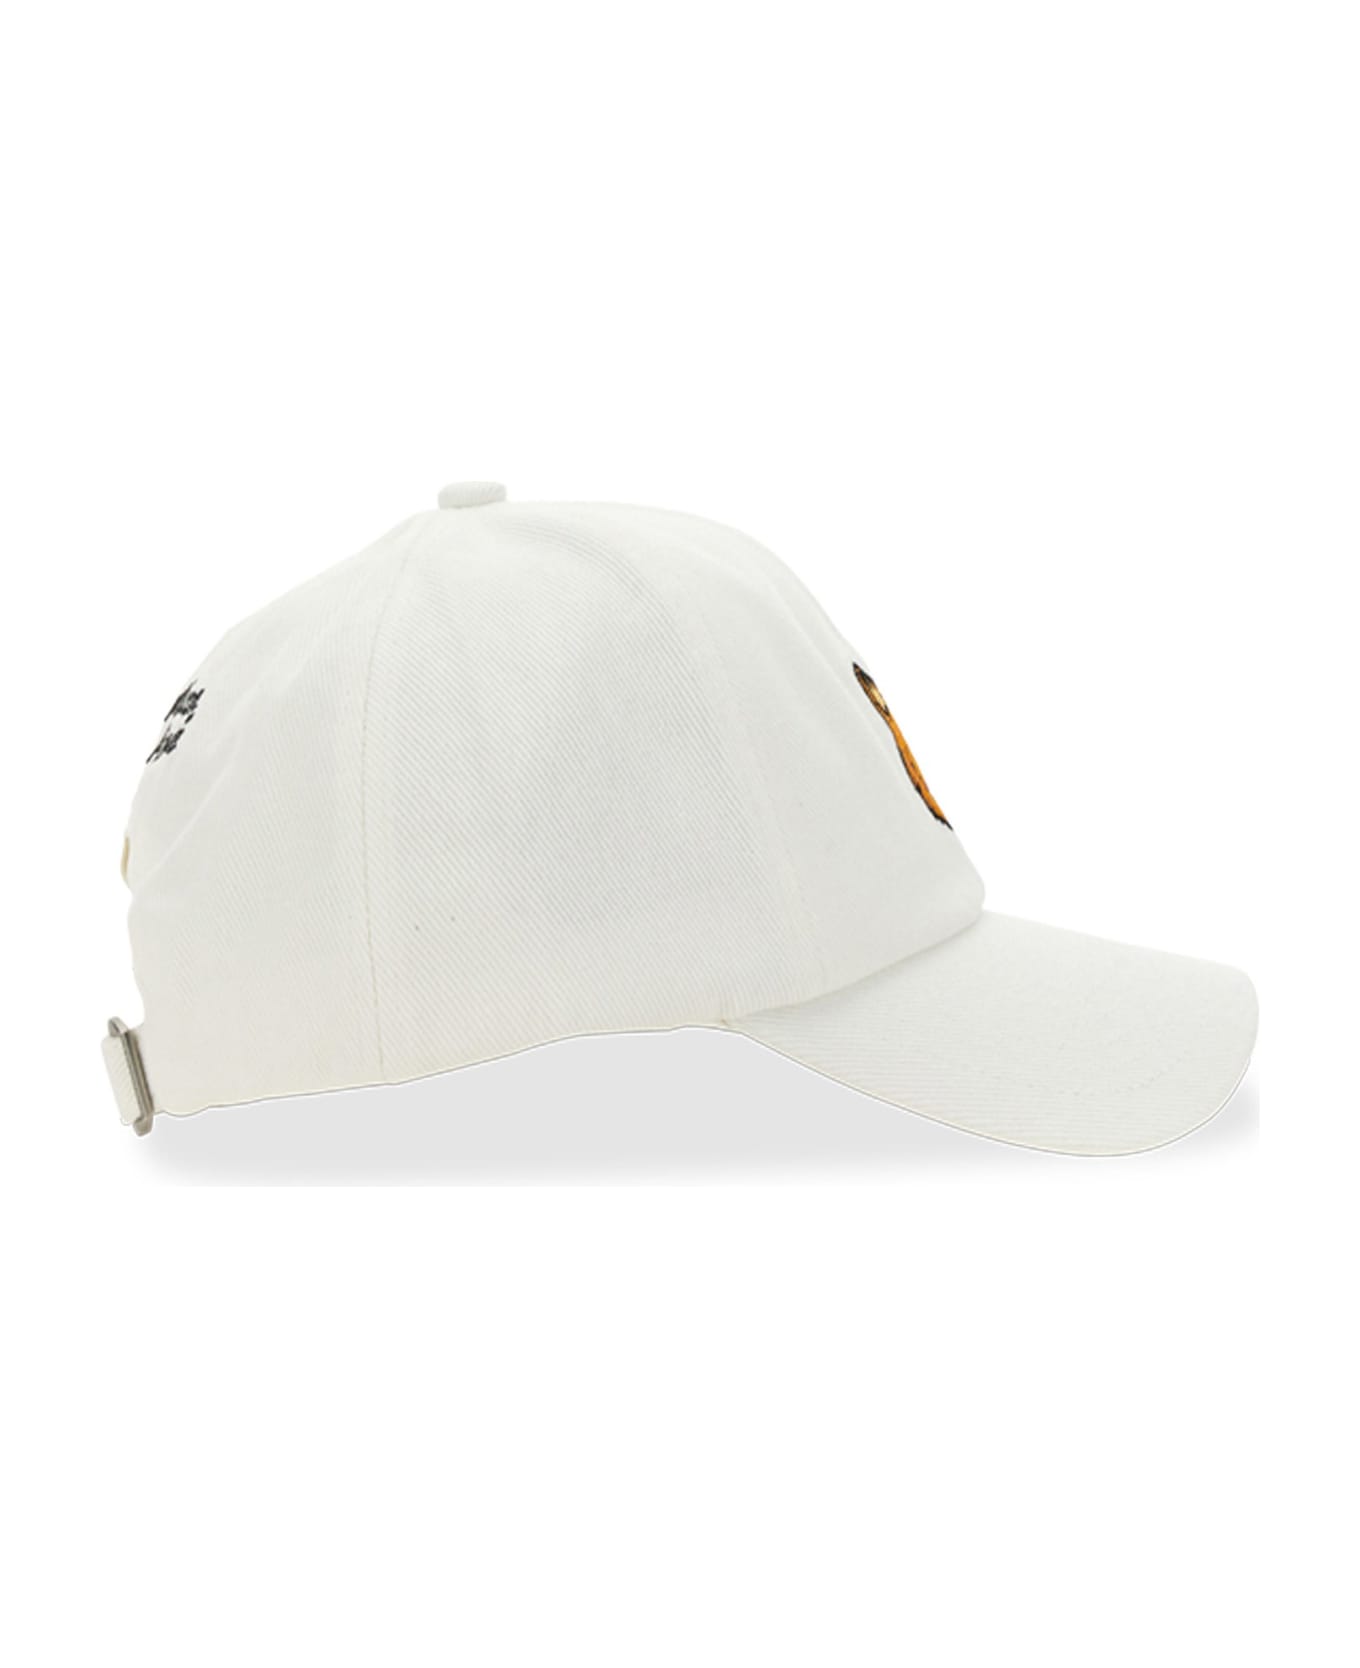 Maison Kitsuné Fox Head Baseball Hat - White